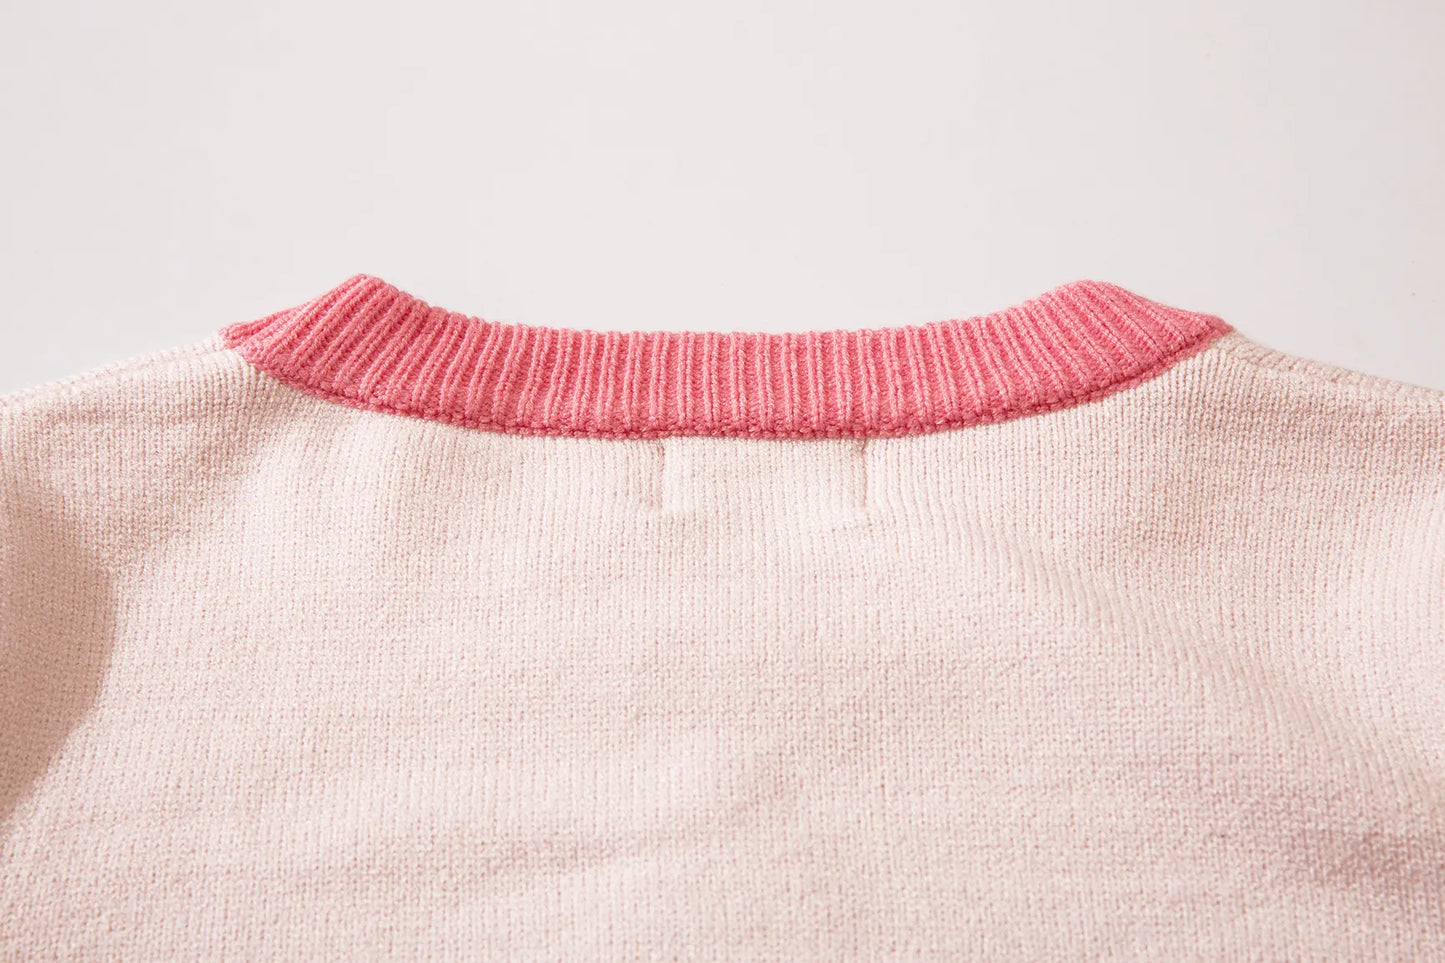 Sweet Star Pattern Color-Block Sweater: Slim-Fit